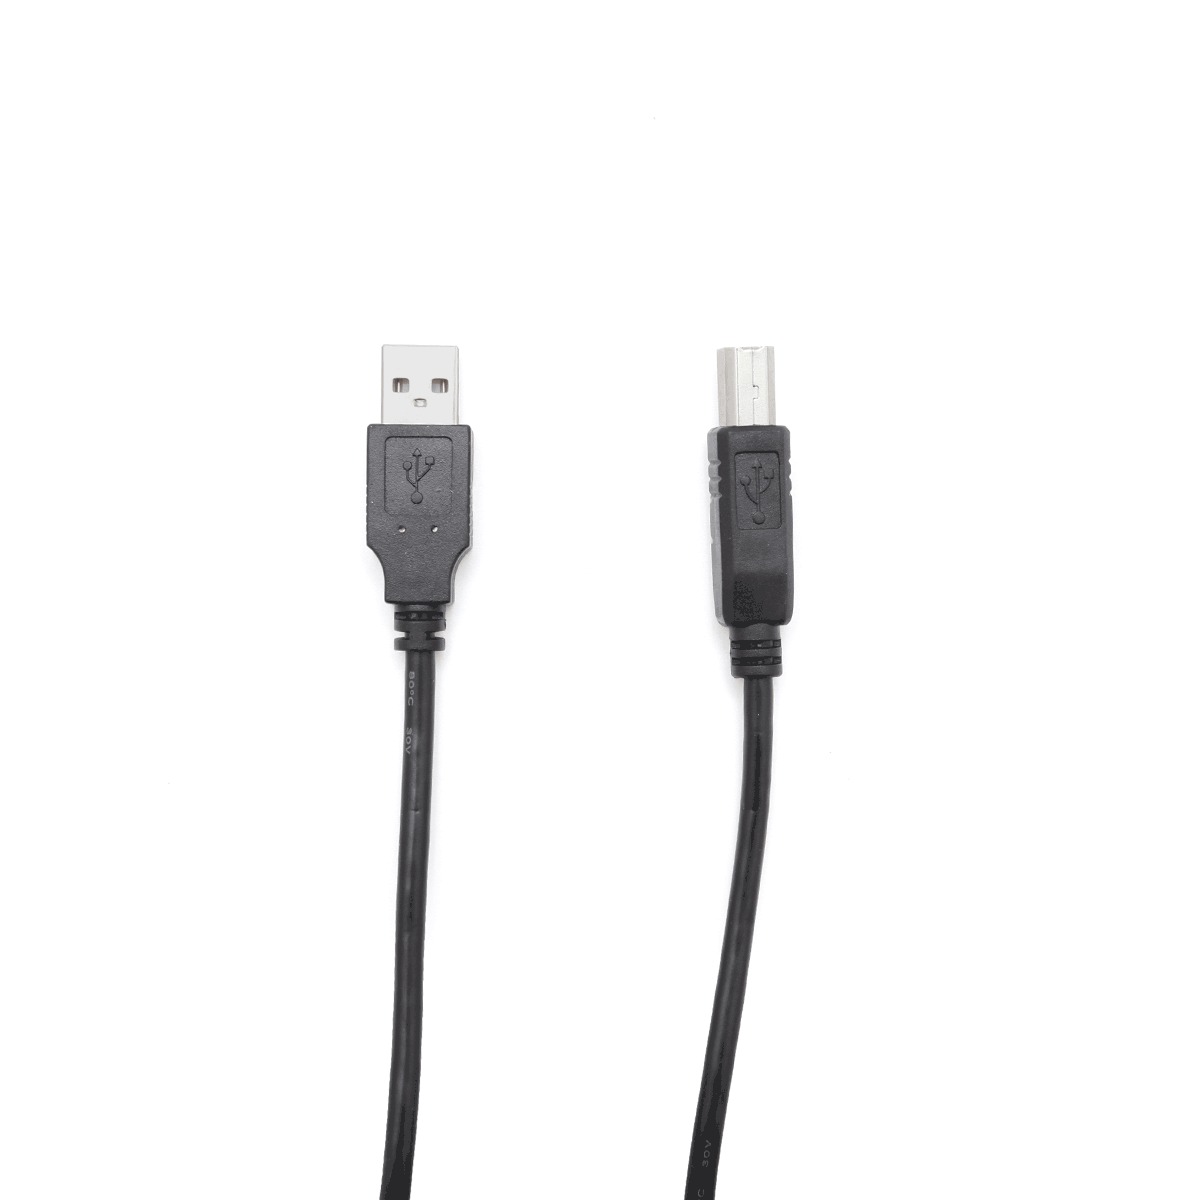 Cable USB 2.0 A Macho a B Macho Spectra 53616 / 1.8 metros / Negro